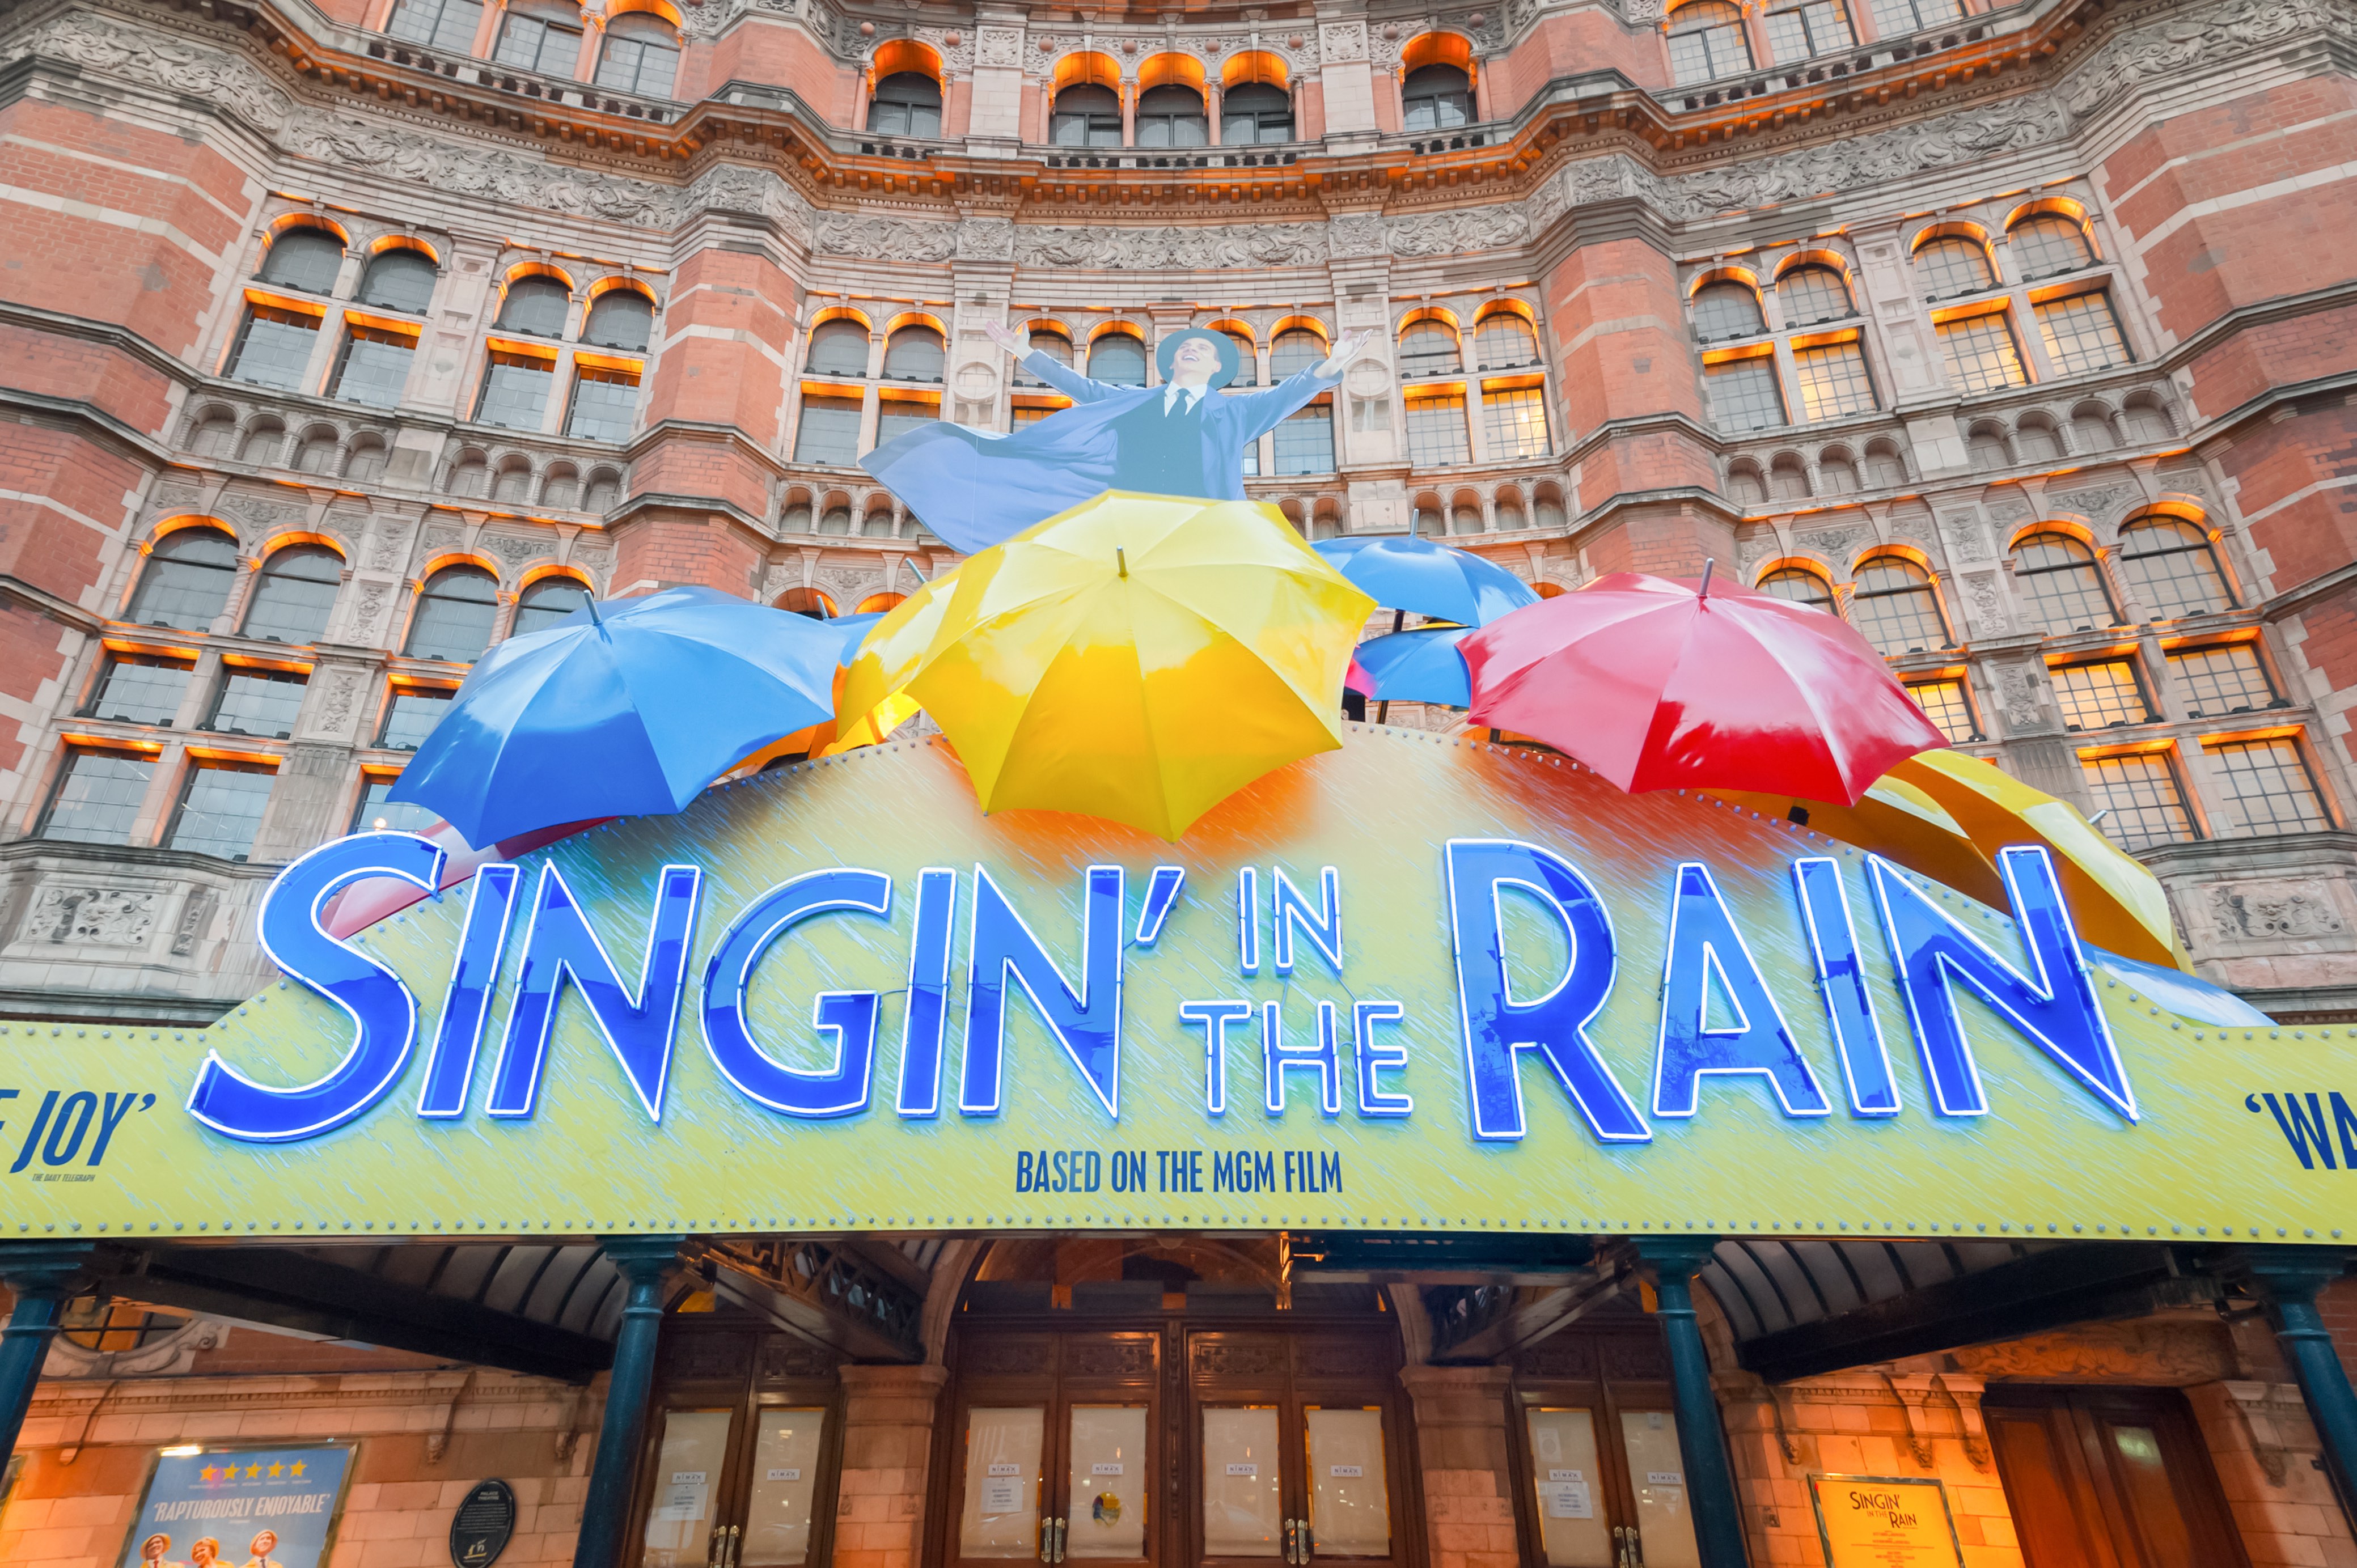 Singin’ in the Rain broadway musical